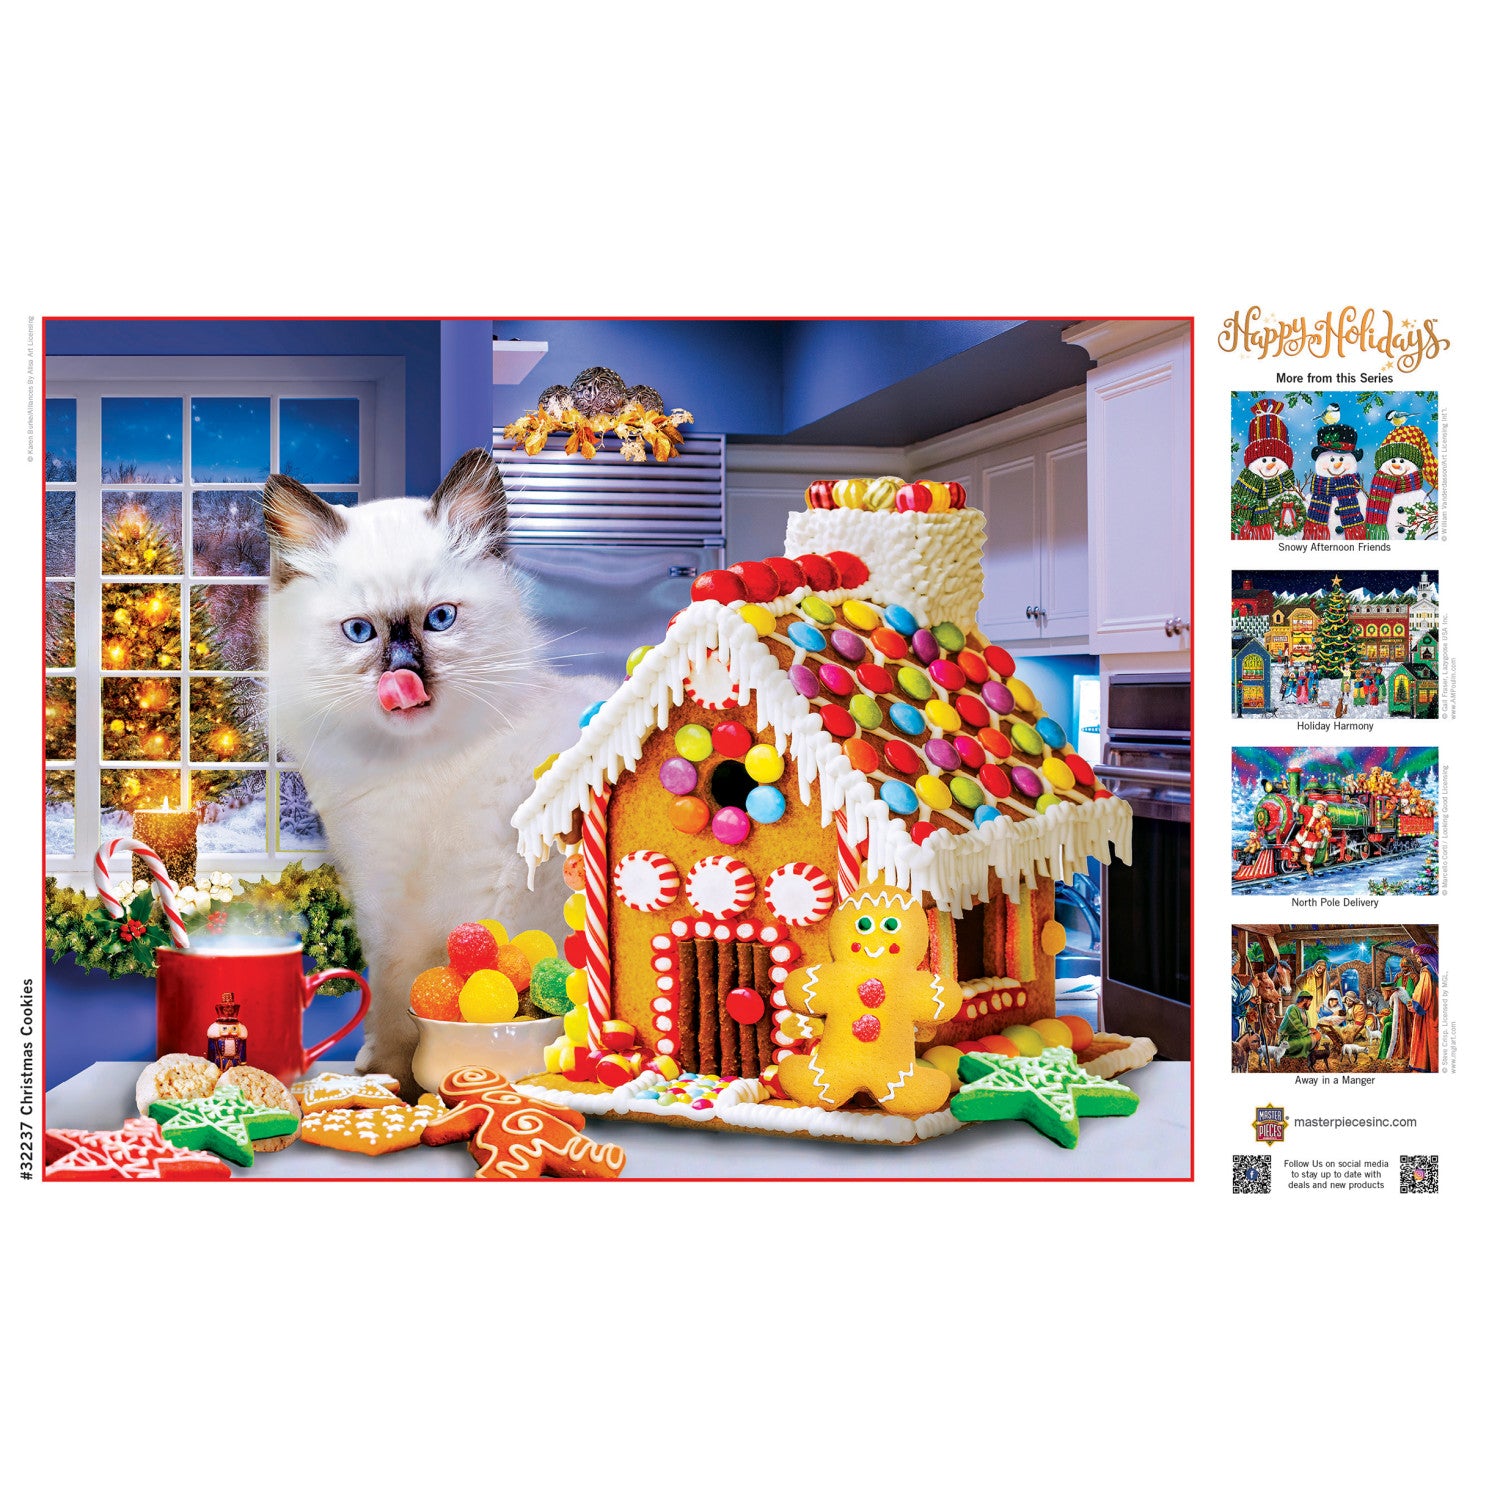 Happy Holidays - Christmas Cookies 300 Piece EZ Grip Jigsaw Puzzle